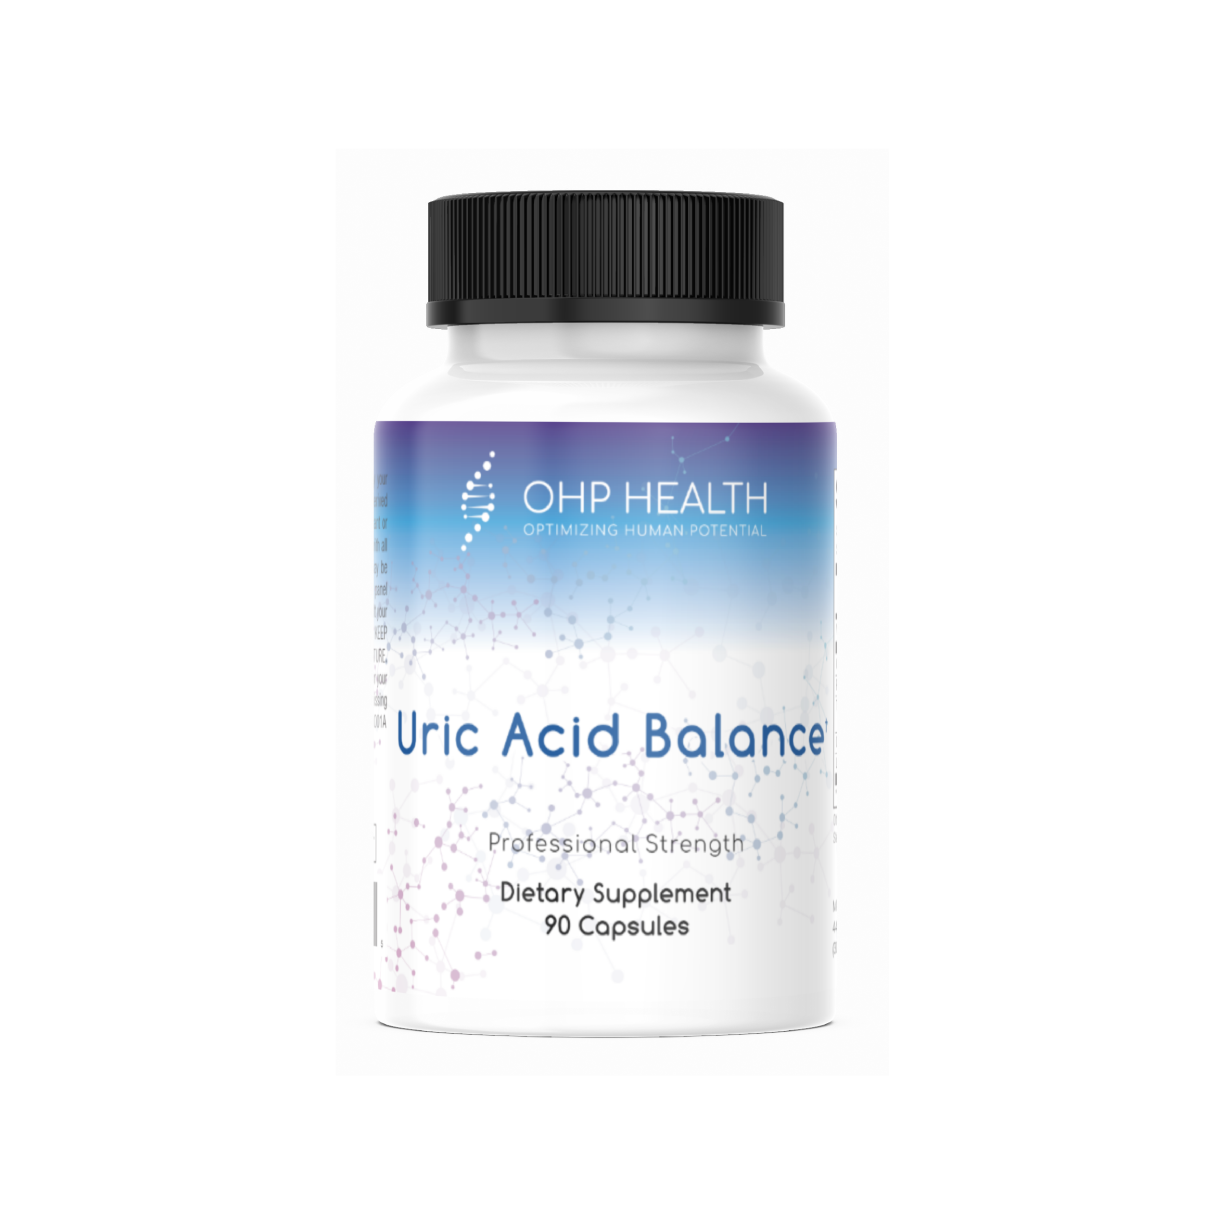 Ohio OHP Health Uric Acid Balance by Longevity Labs Inc.